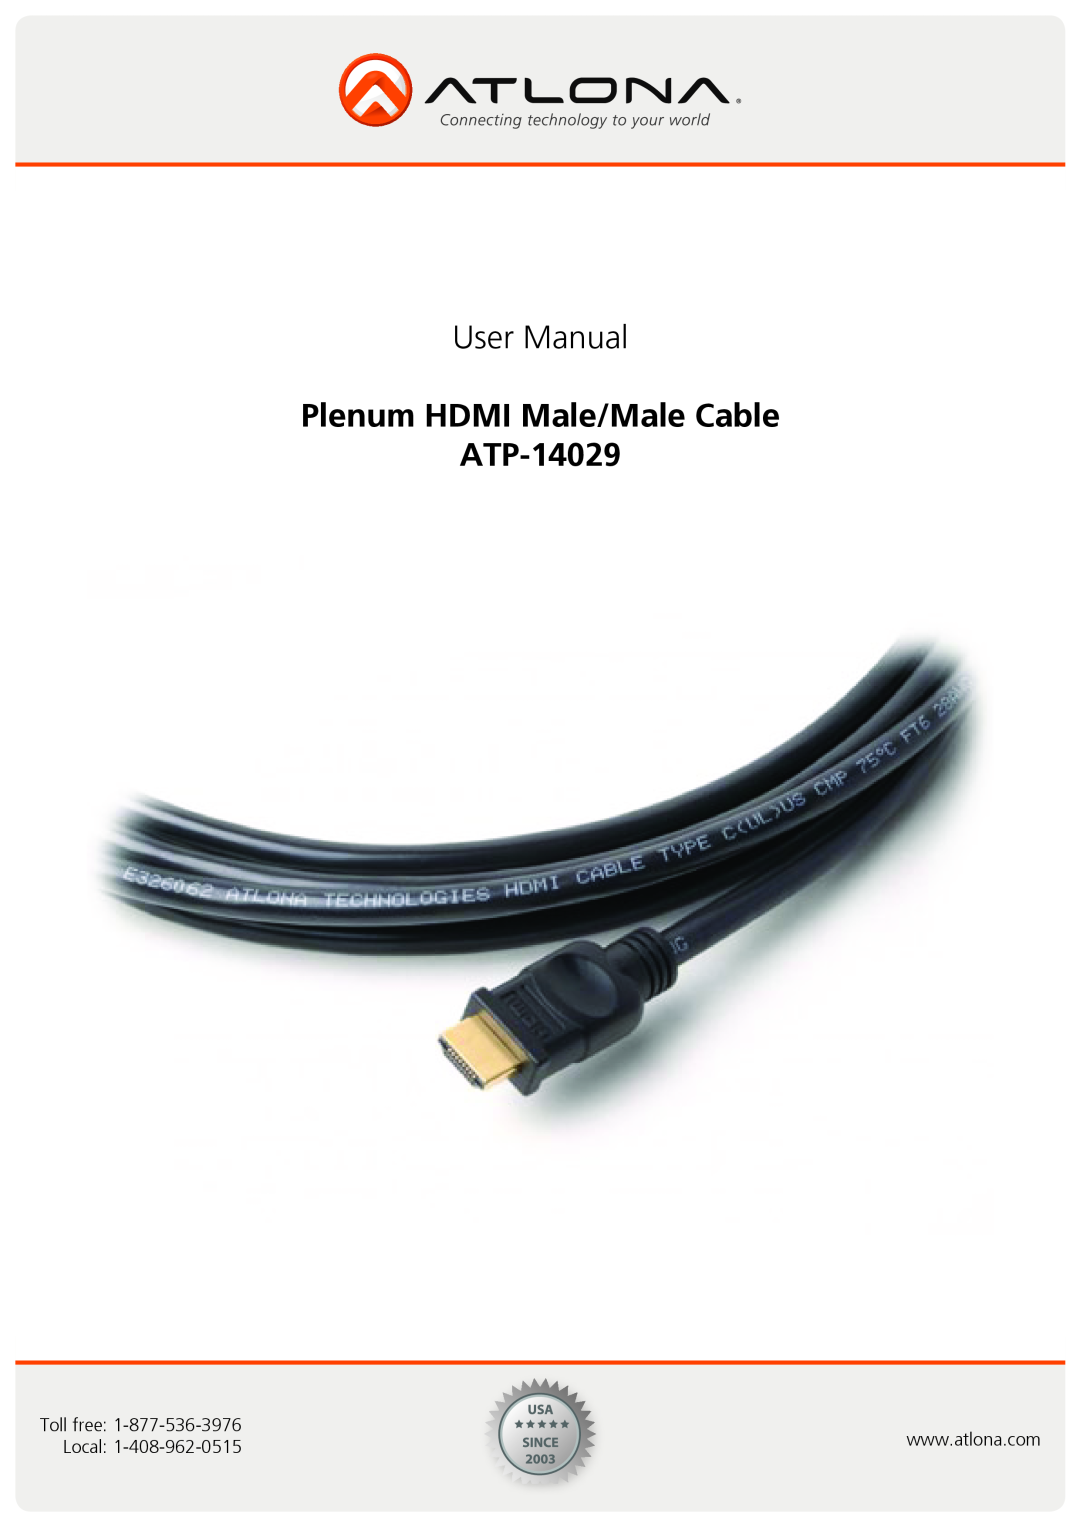 Atlona user manual User Manual, Plenum HDMI Male/Male Cable ATP-14029, Toll free, Local 